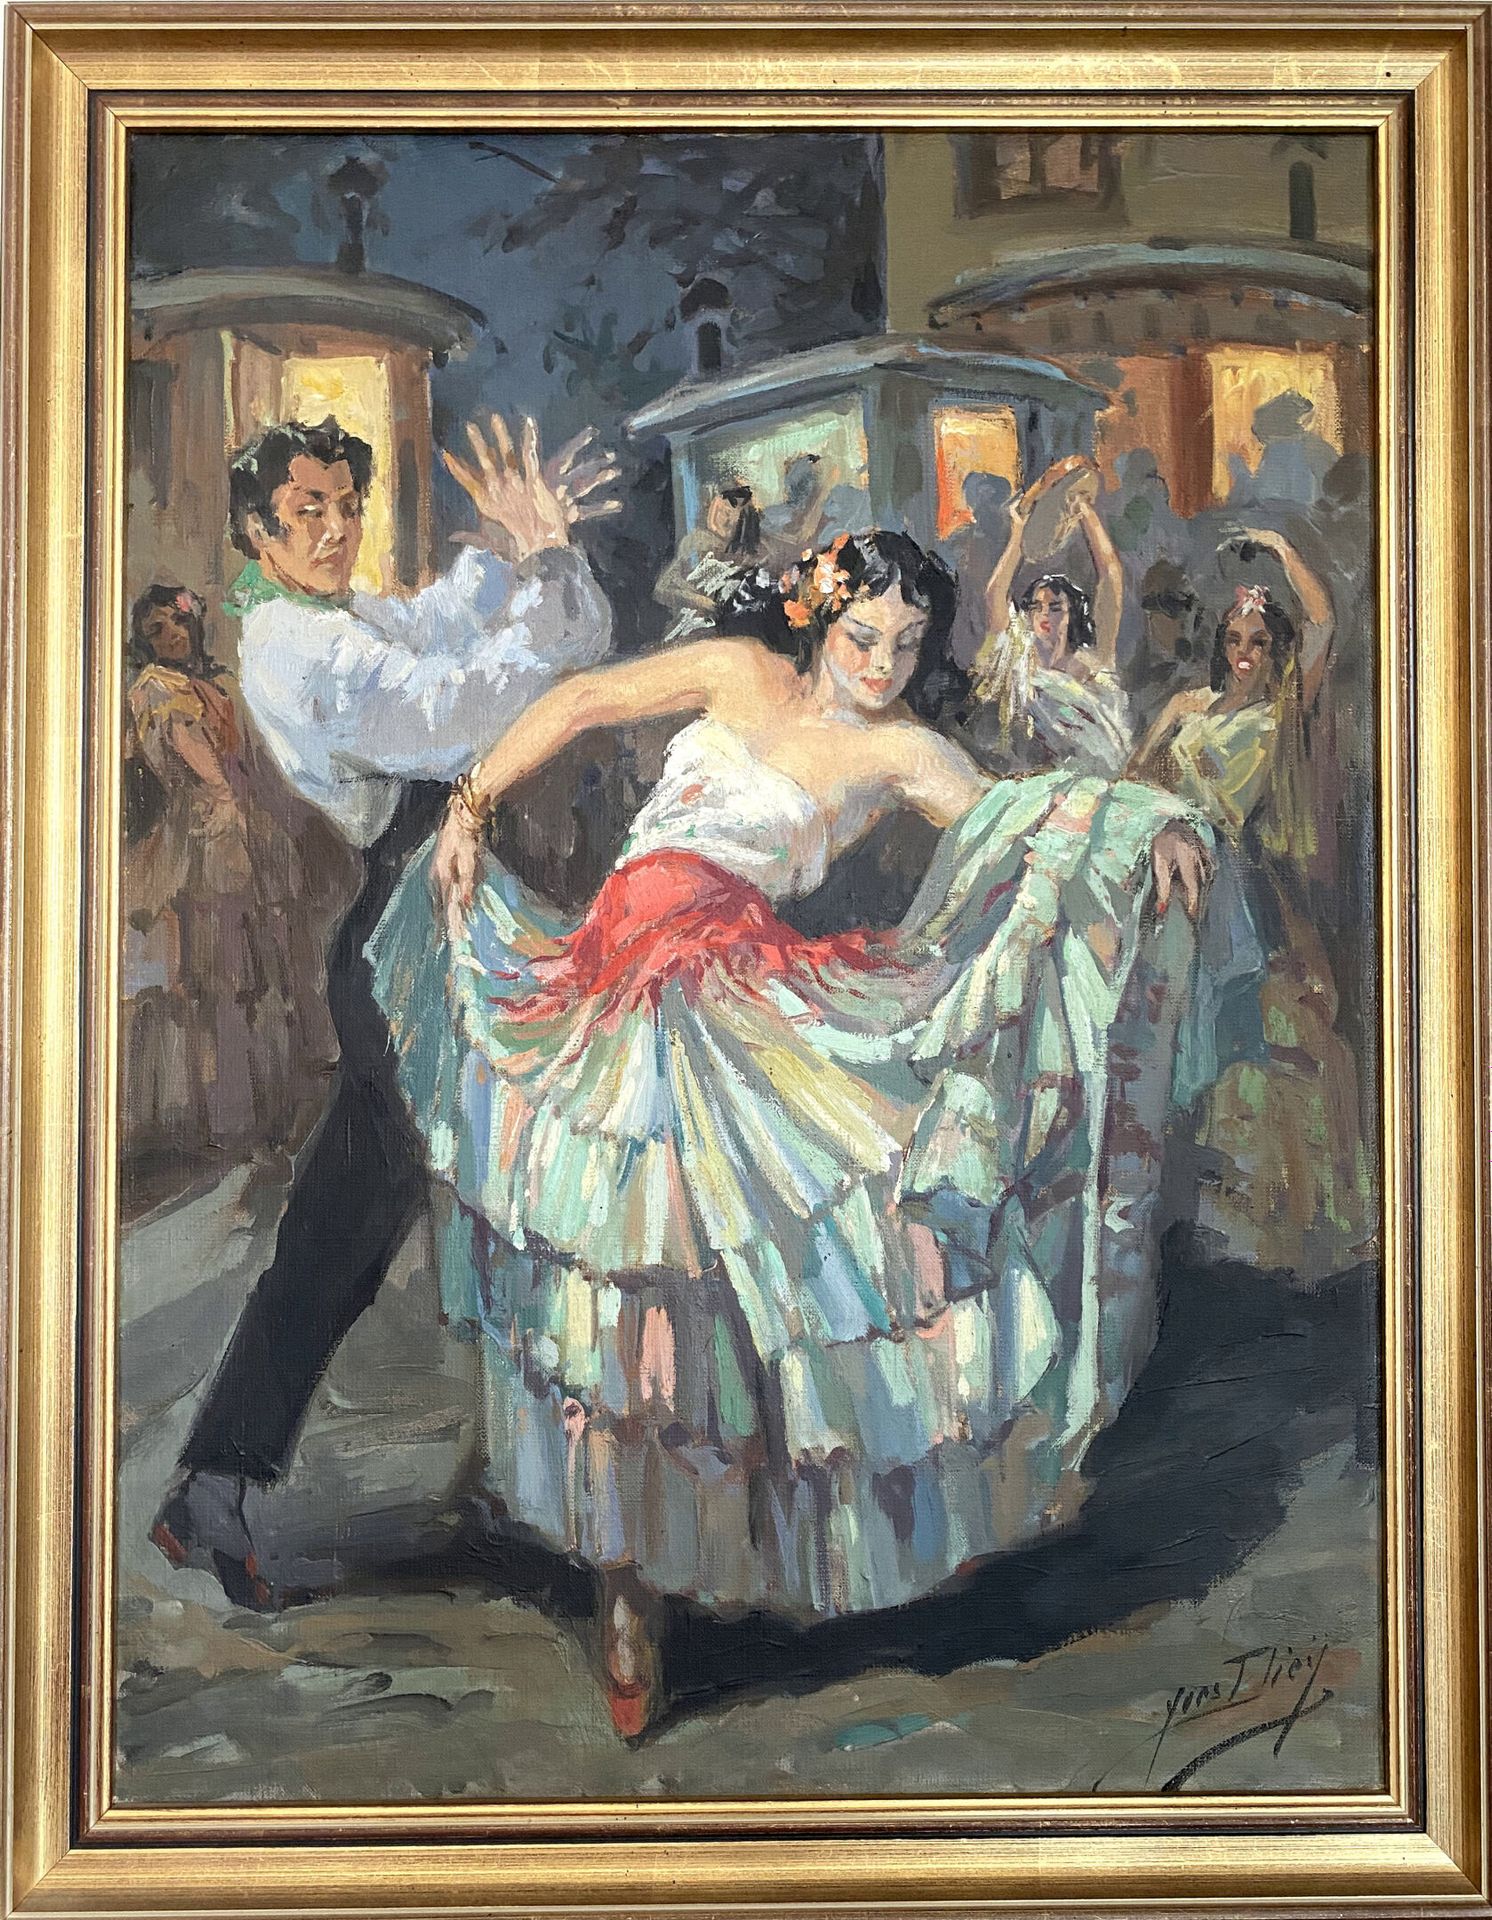 Yves Diey (1892-1984) 一对弗拉门戈舞者在广场上跳舞。

布面油画。

右下方有签名。

65 x 50厘米。